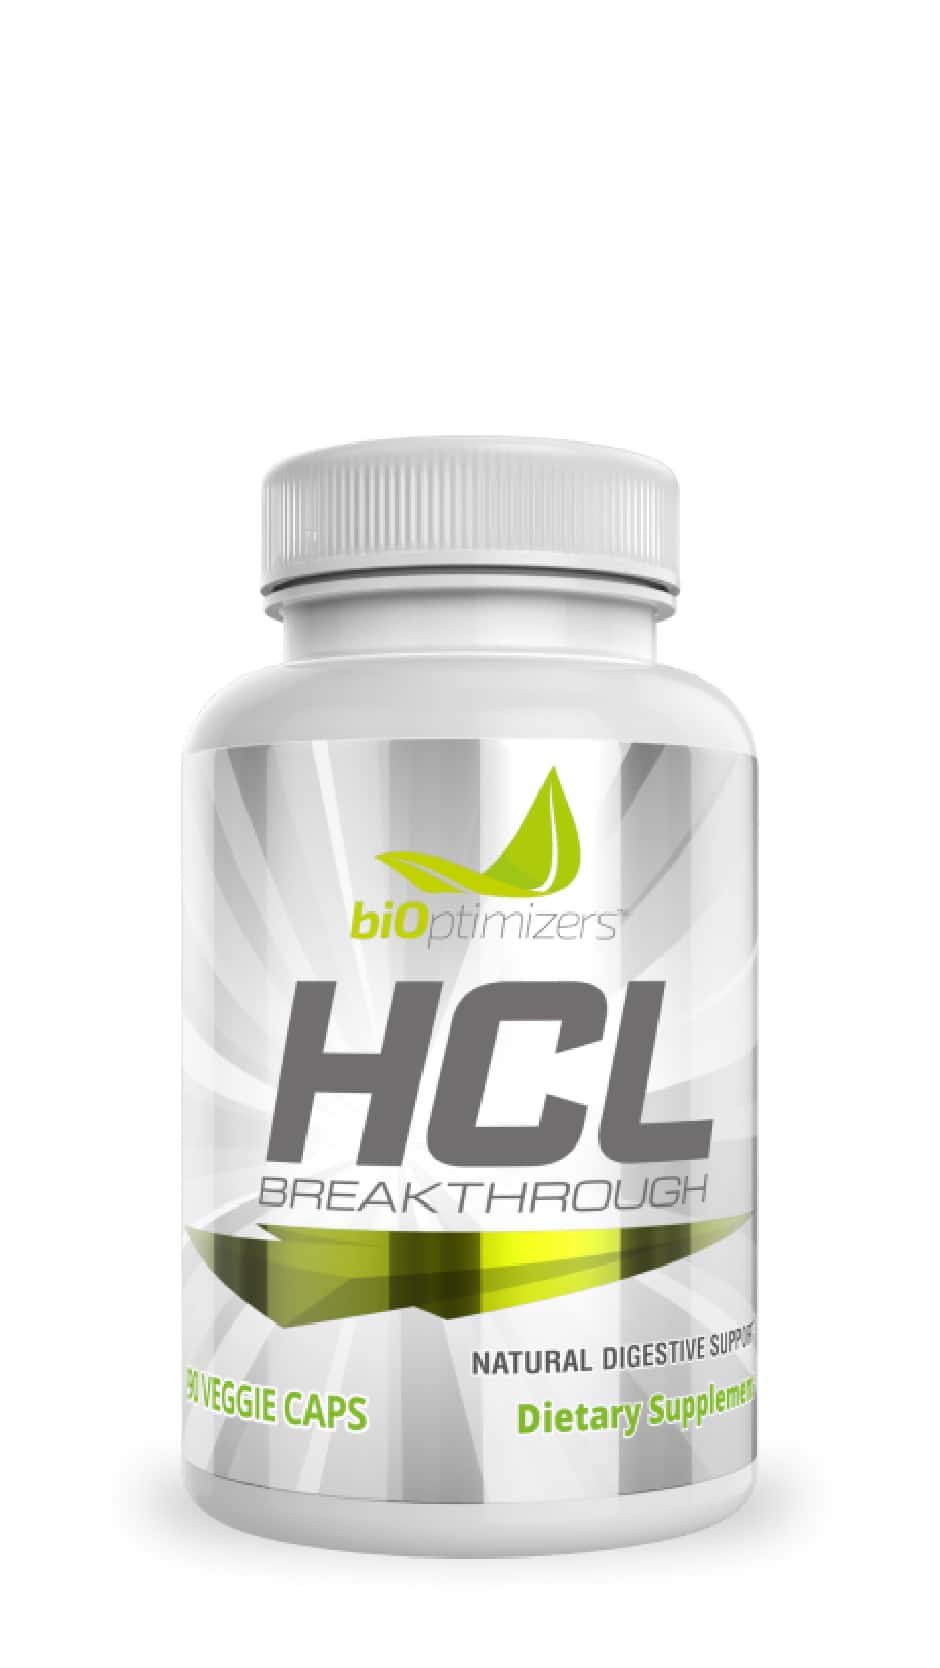 BiOptimizers HCL Breakthrough bei LiveHelfi kaufen